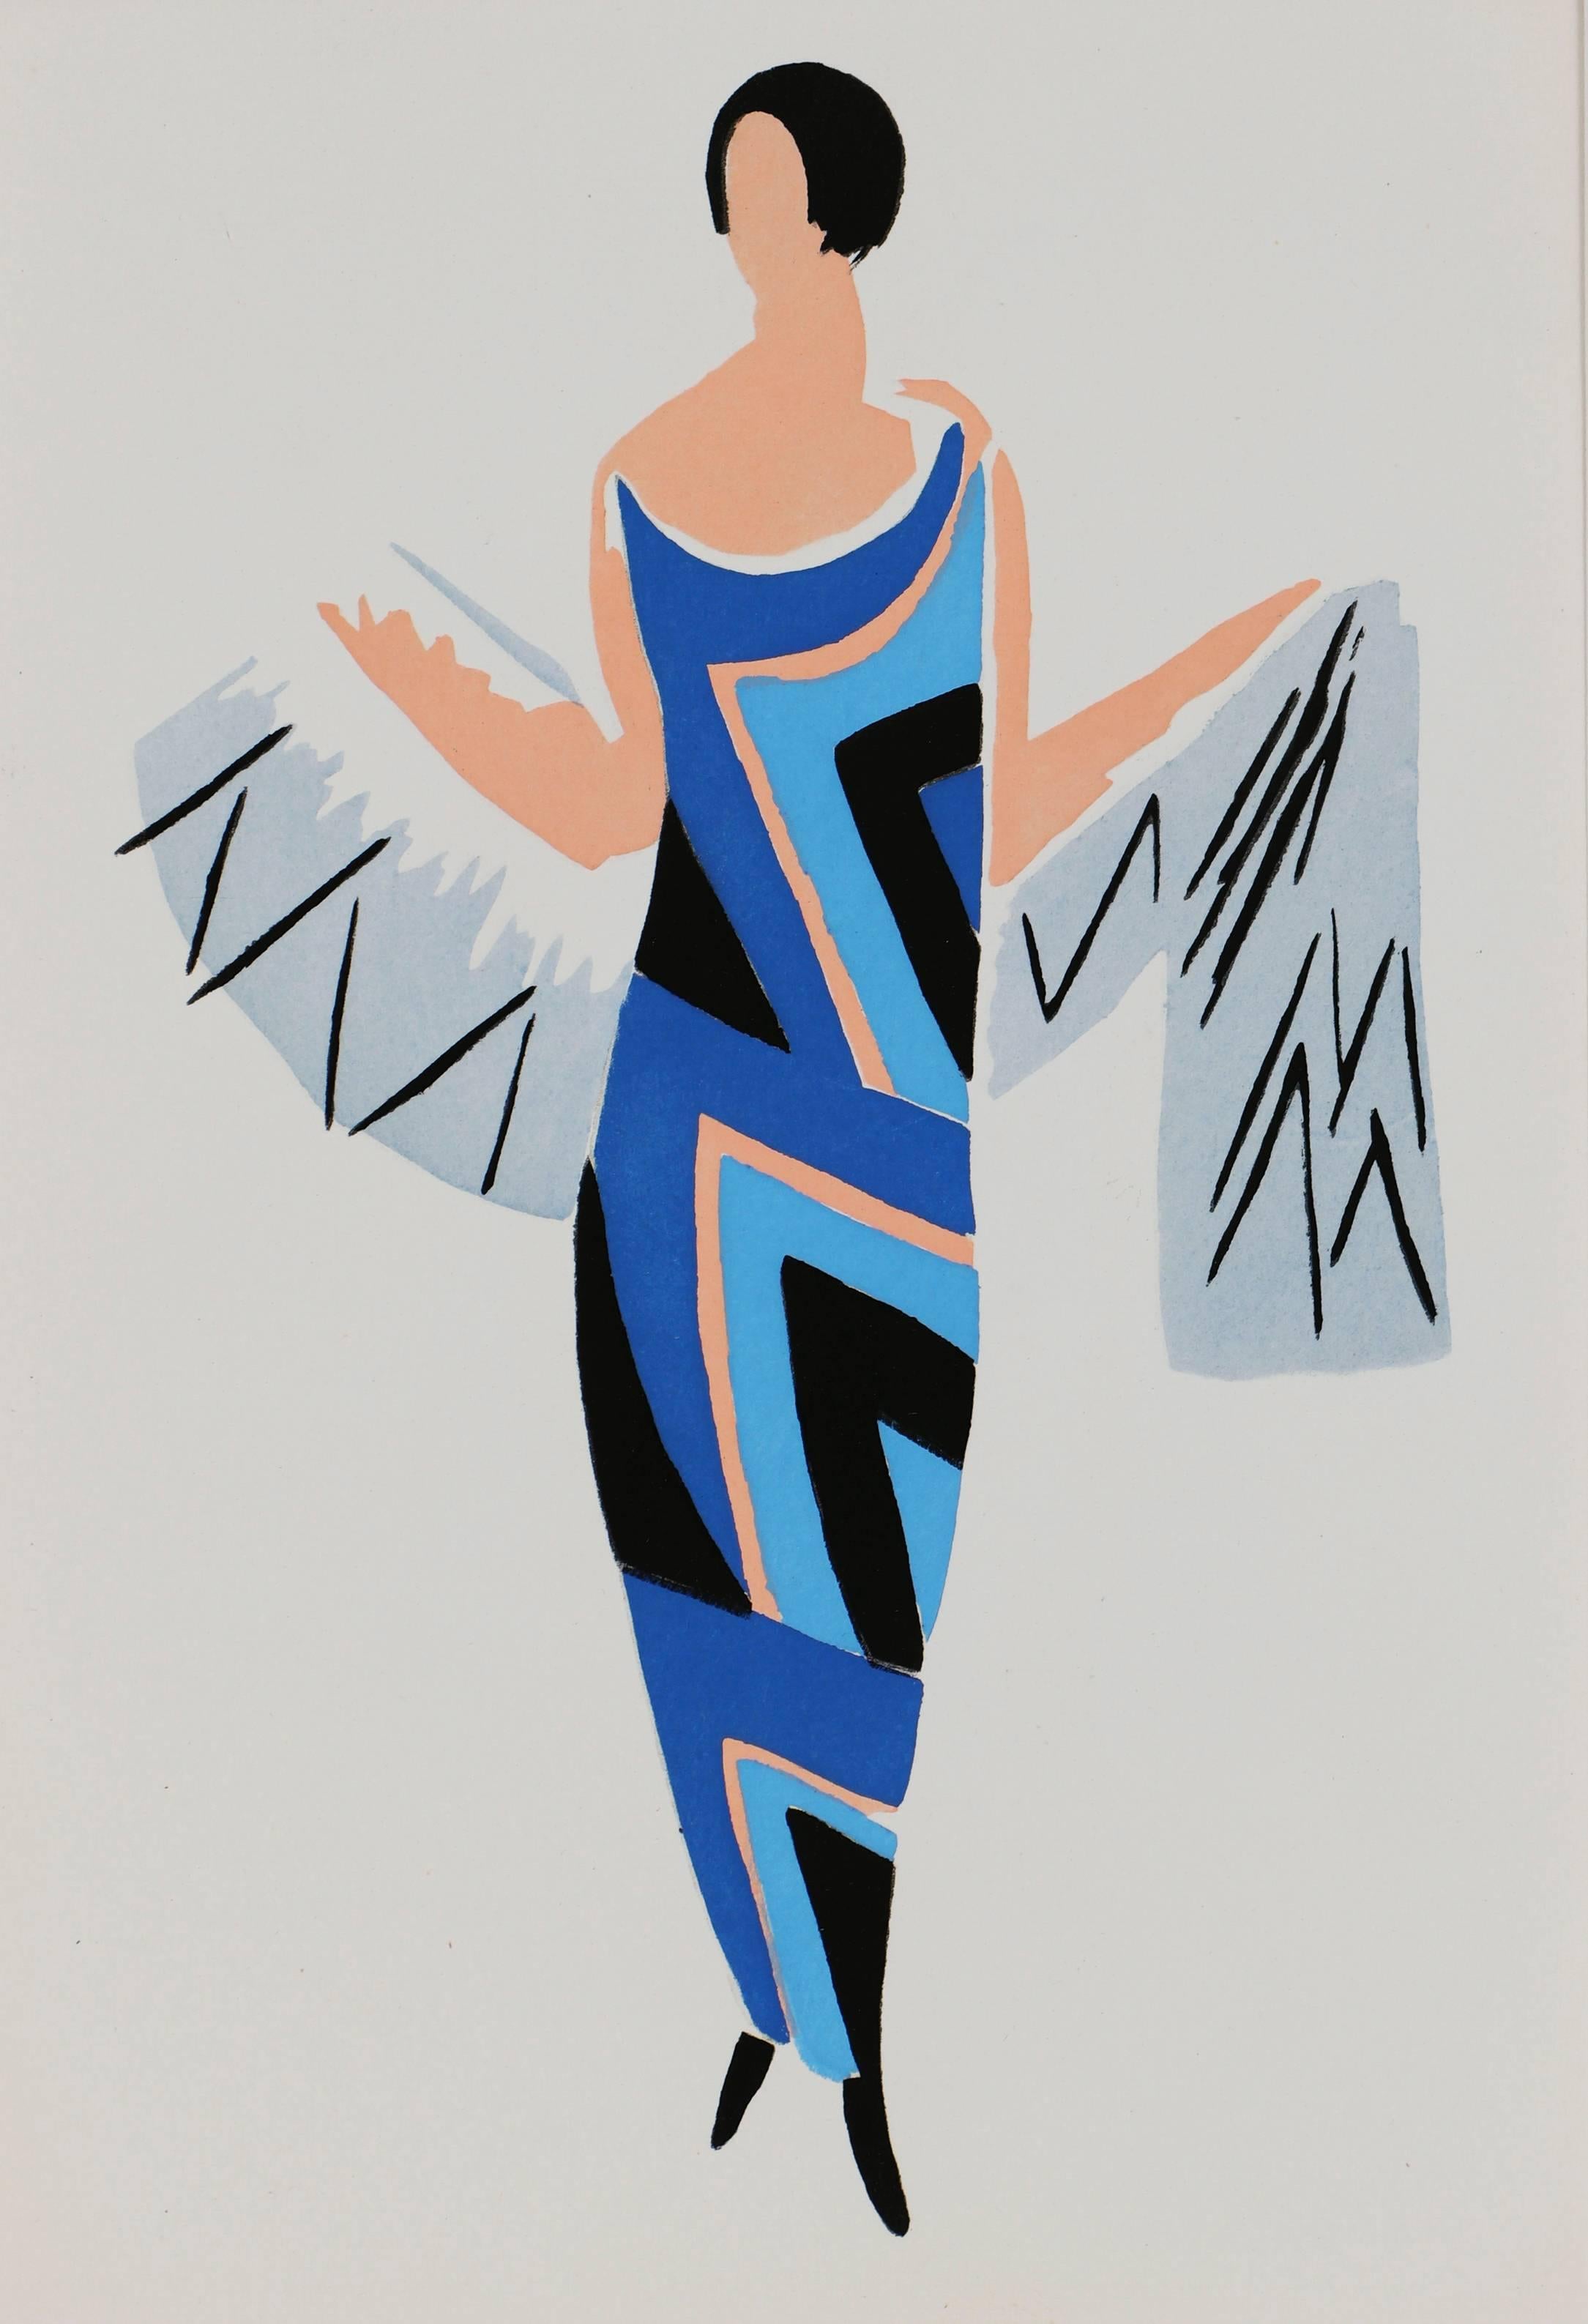  Dame en Bleu - Print by (after) Sonia Delaunay